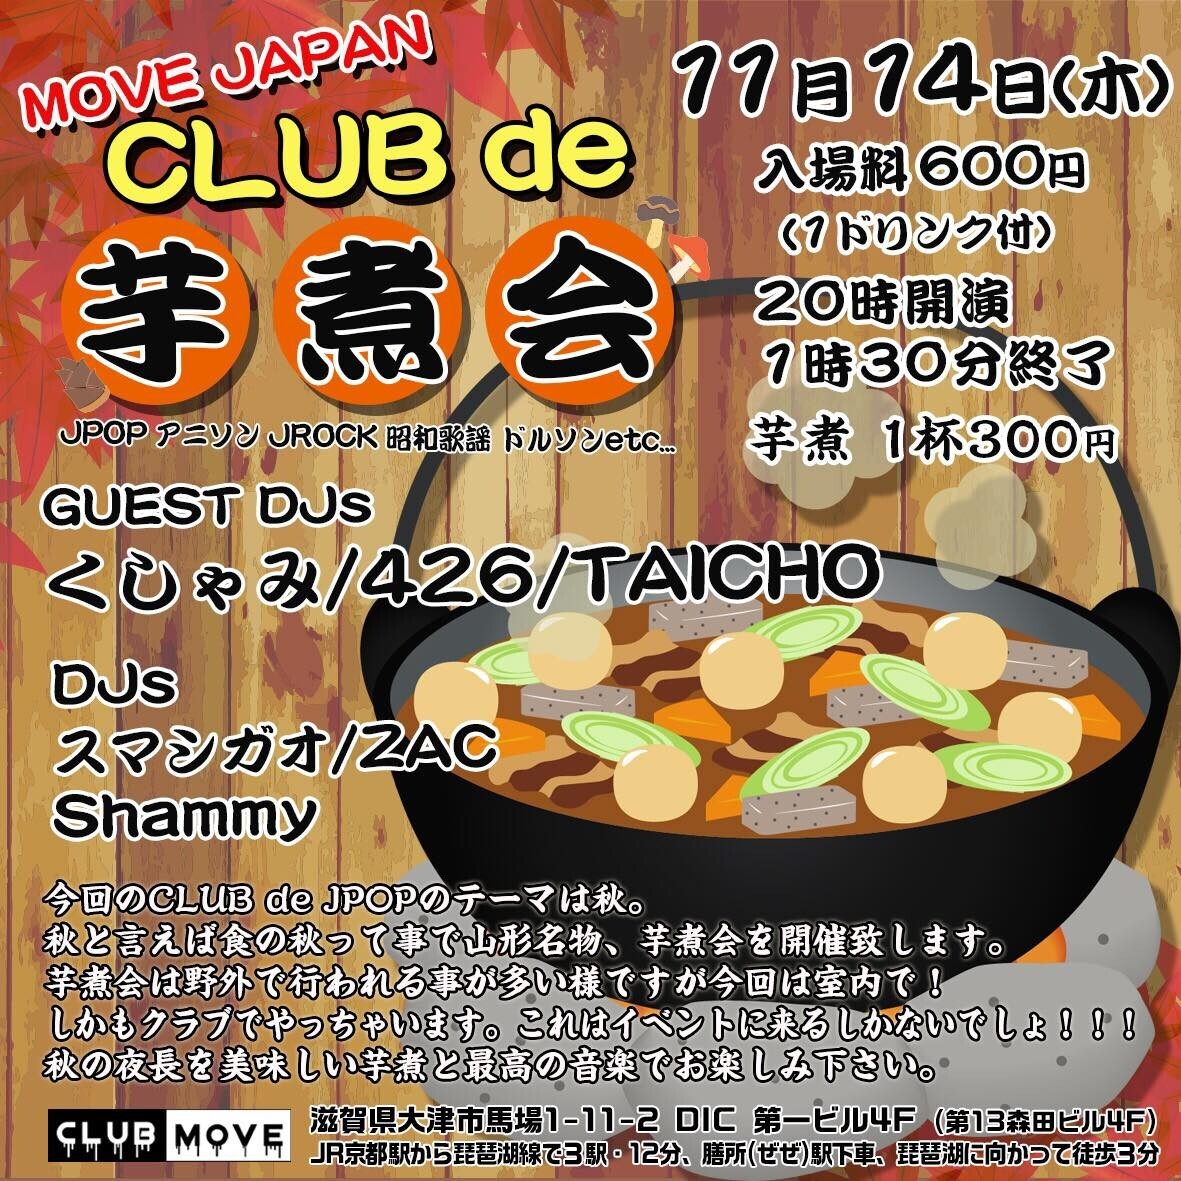 Iflyer Club De J Pop Club De 芋煮会 Club Move 滋賀県